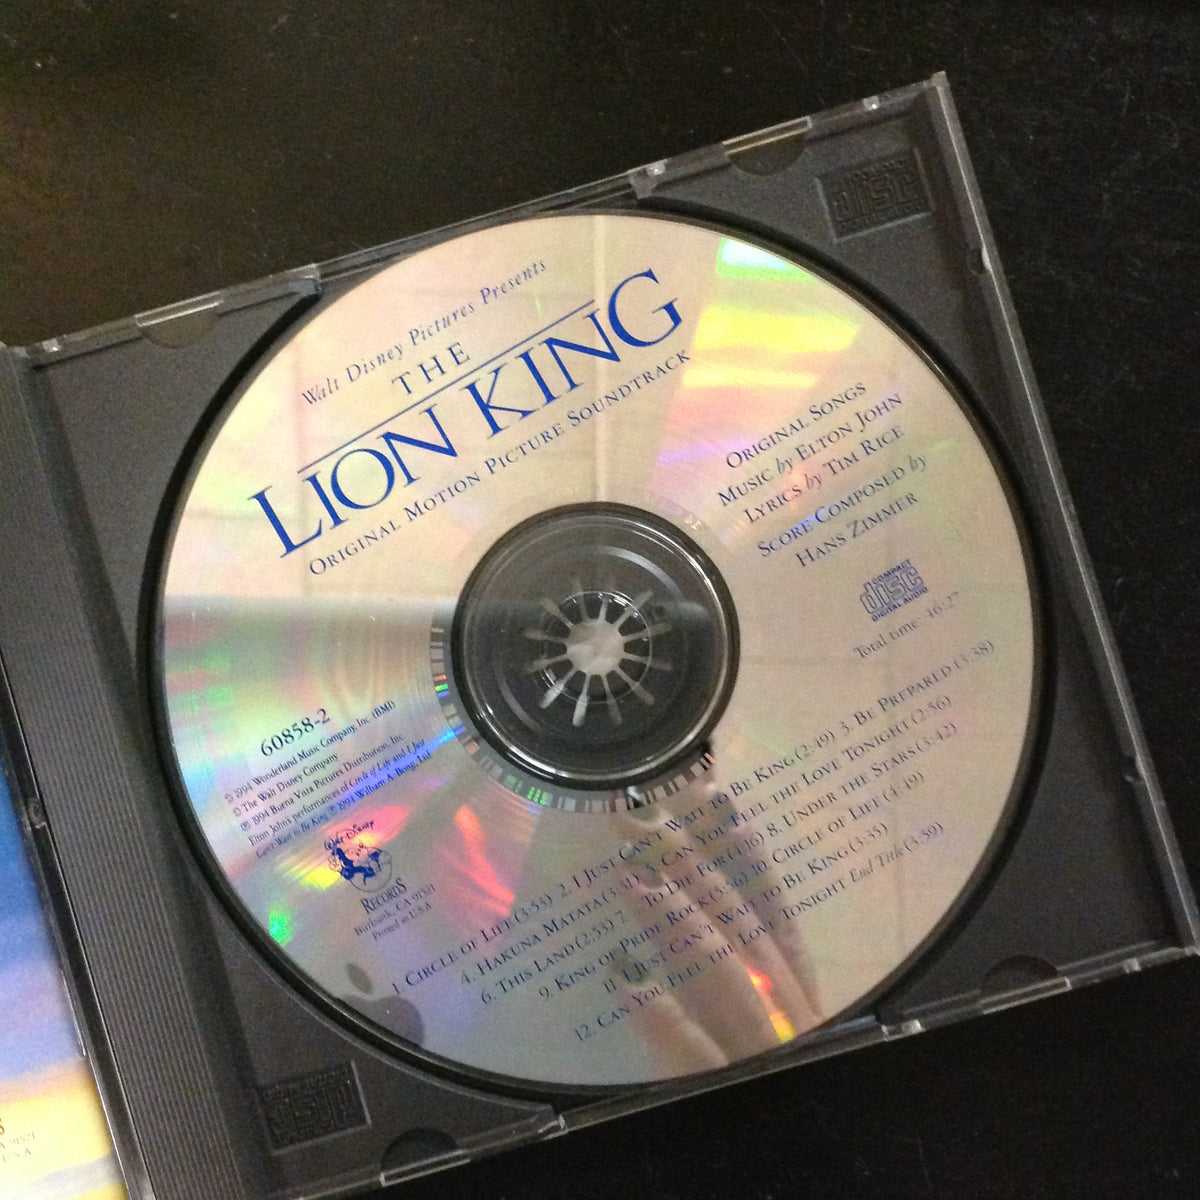 the lion king original motion picture soundtrack